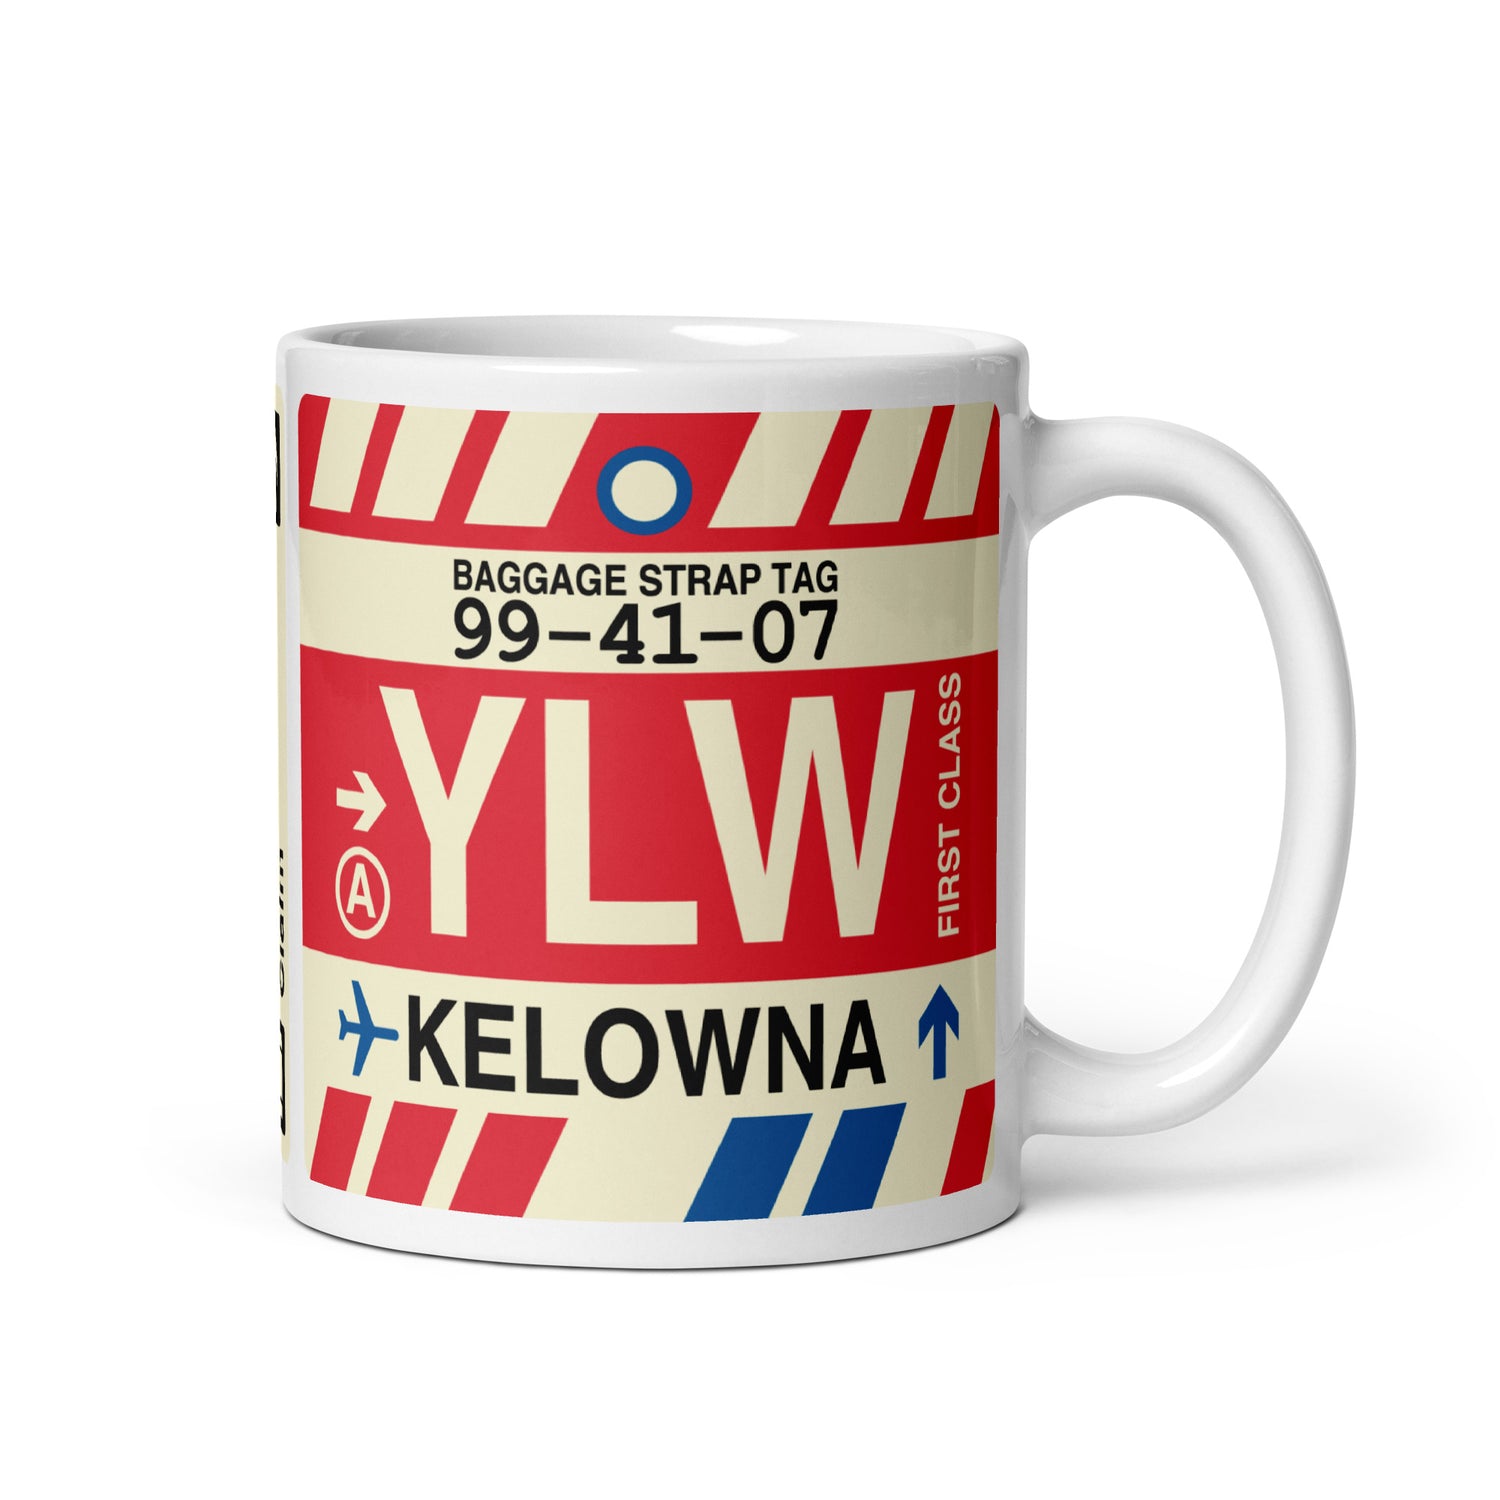 Kelowna British Columbia Coffee Mugs and Water Bottles • YLW Airport Code